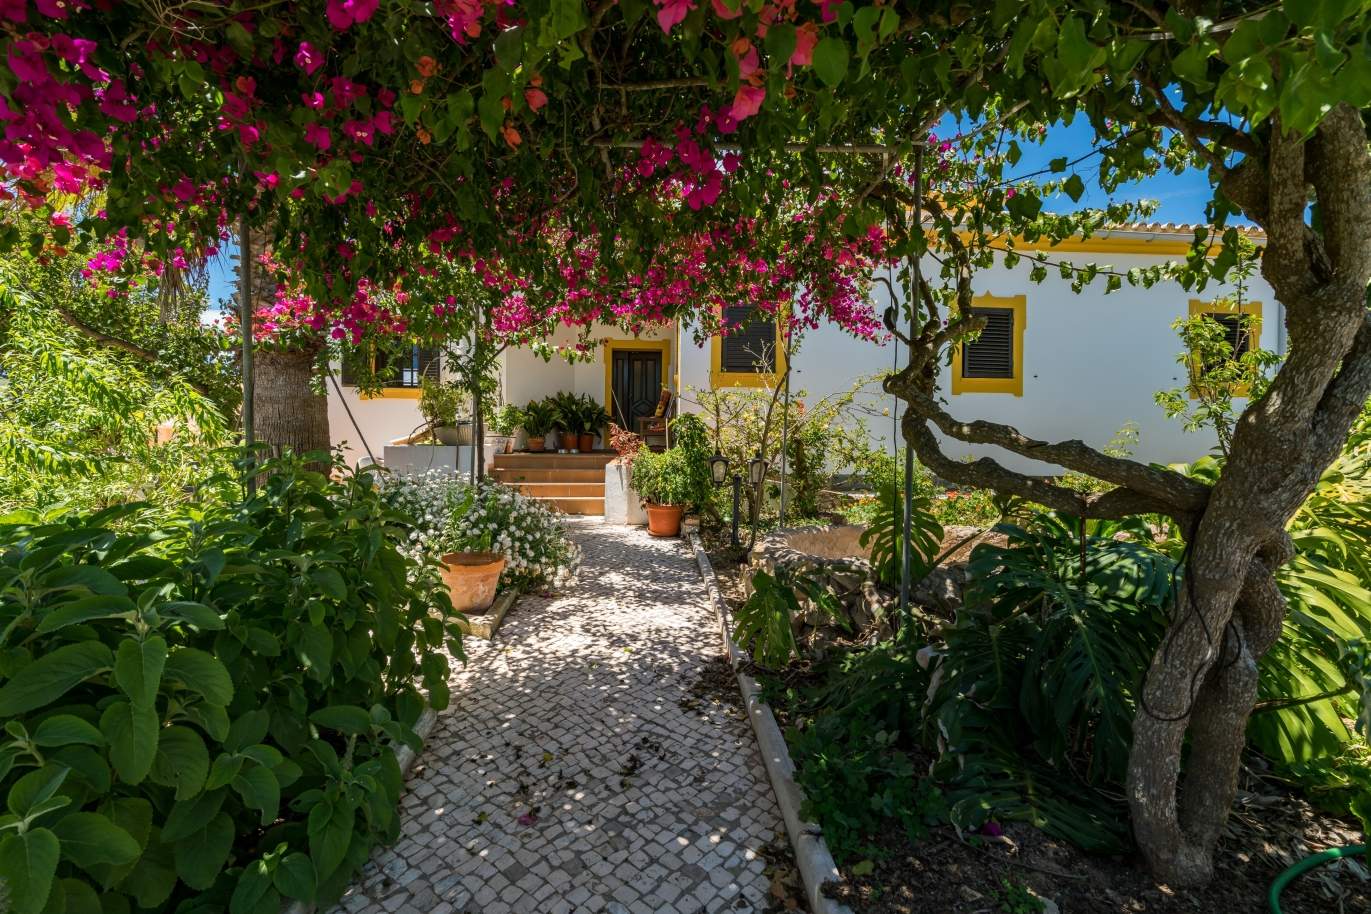 4 Bedroom Villa with plot of land, sale, Albufeira, Algarve, Portugal_143779